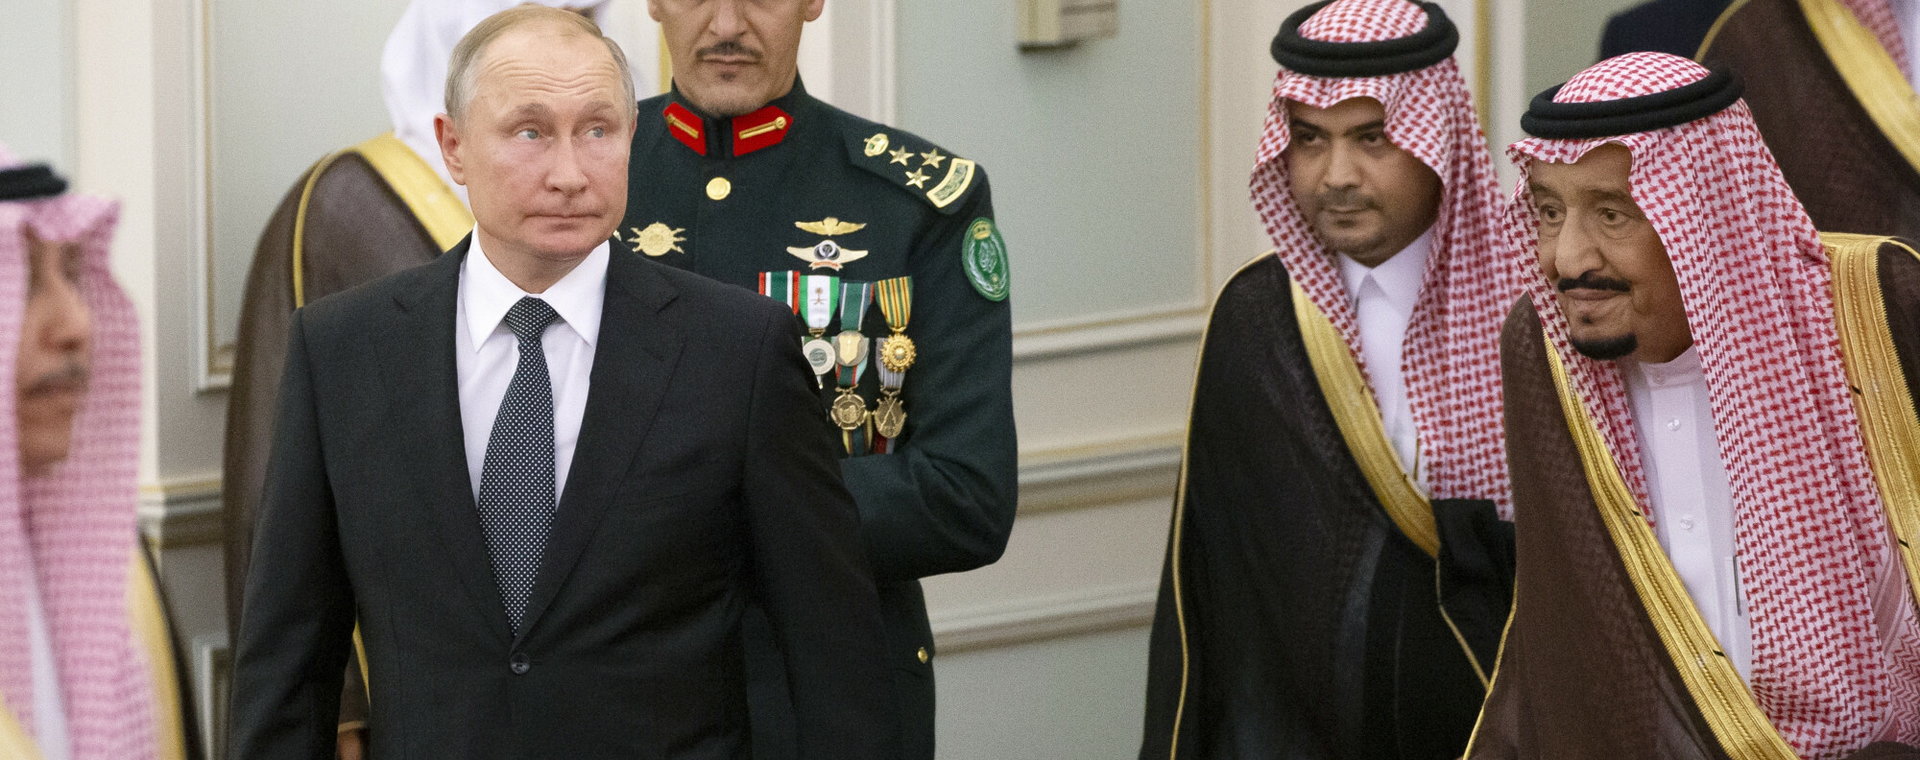 Prezydent Rosji Władimir Putin i król Arabii Saudyjskiej Salman ibn Abd al-Aziz Al Su’ud